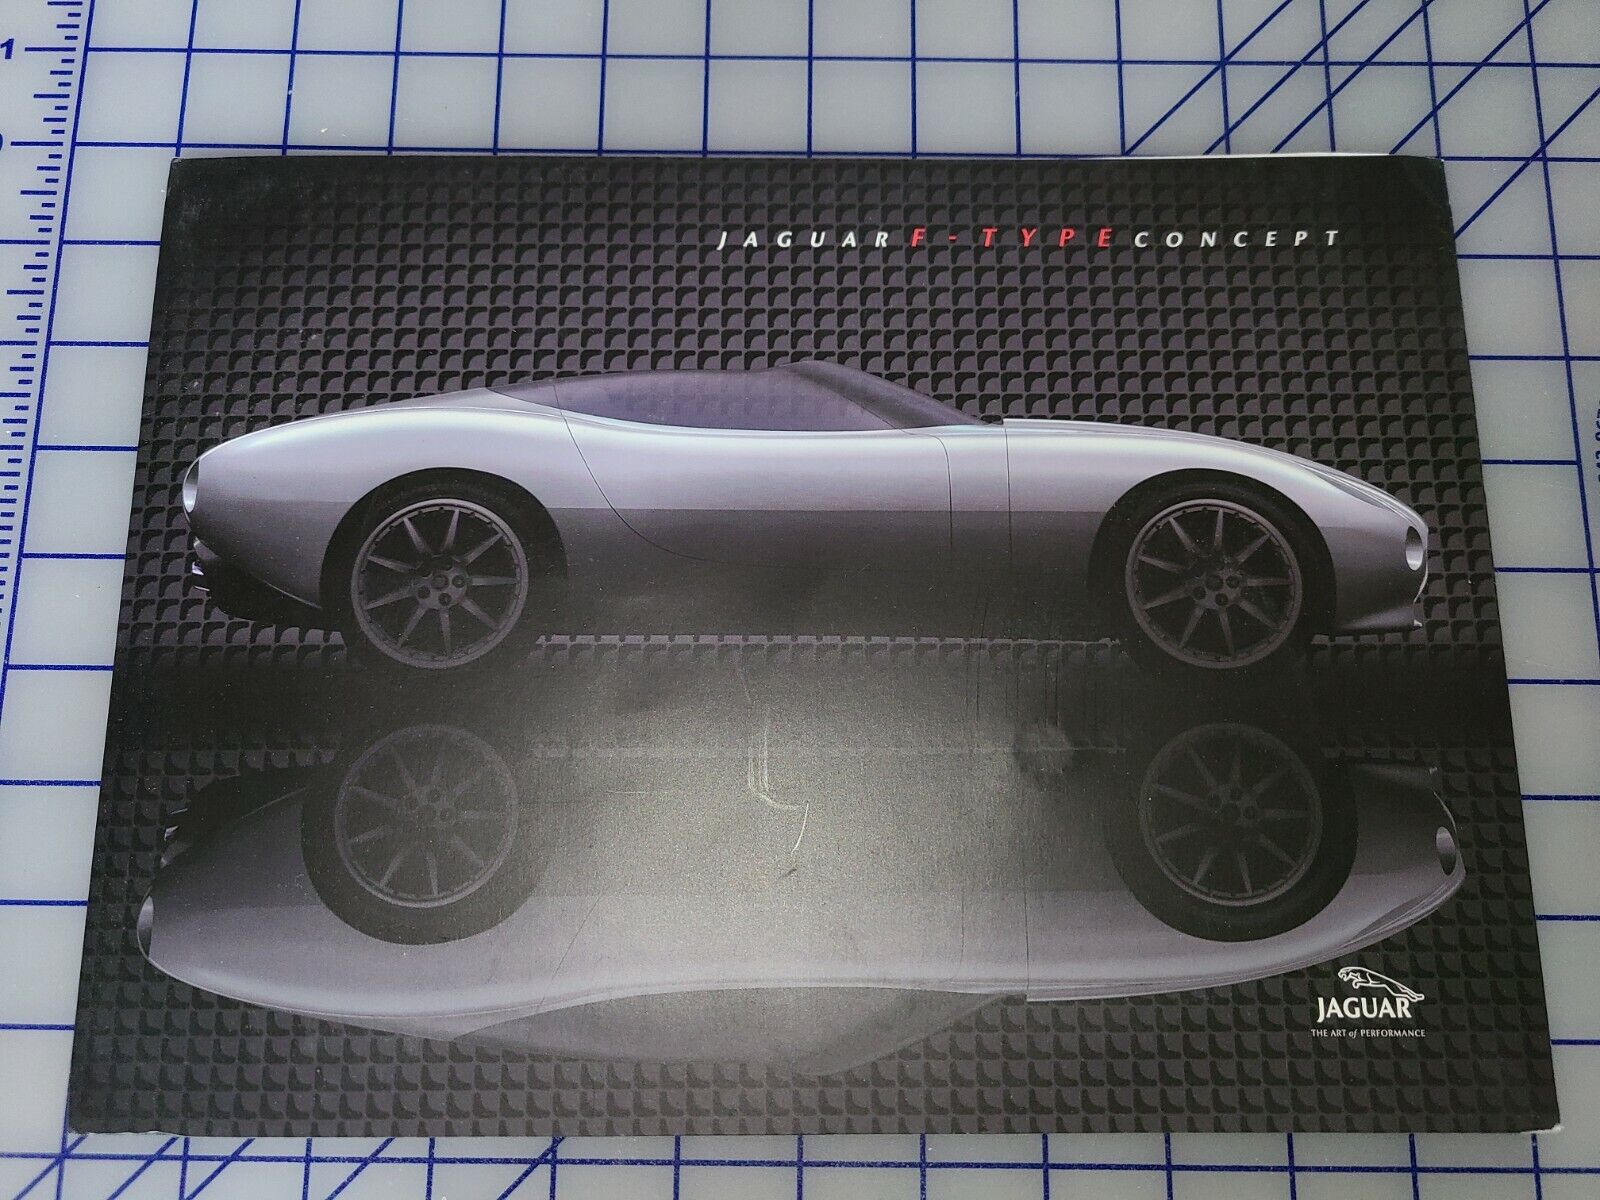 2000 Jaguar F Type Concept Press Kit Product Information Brochure 